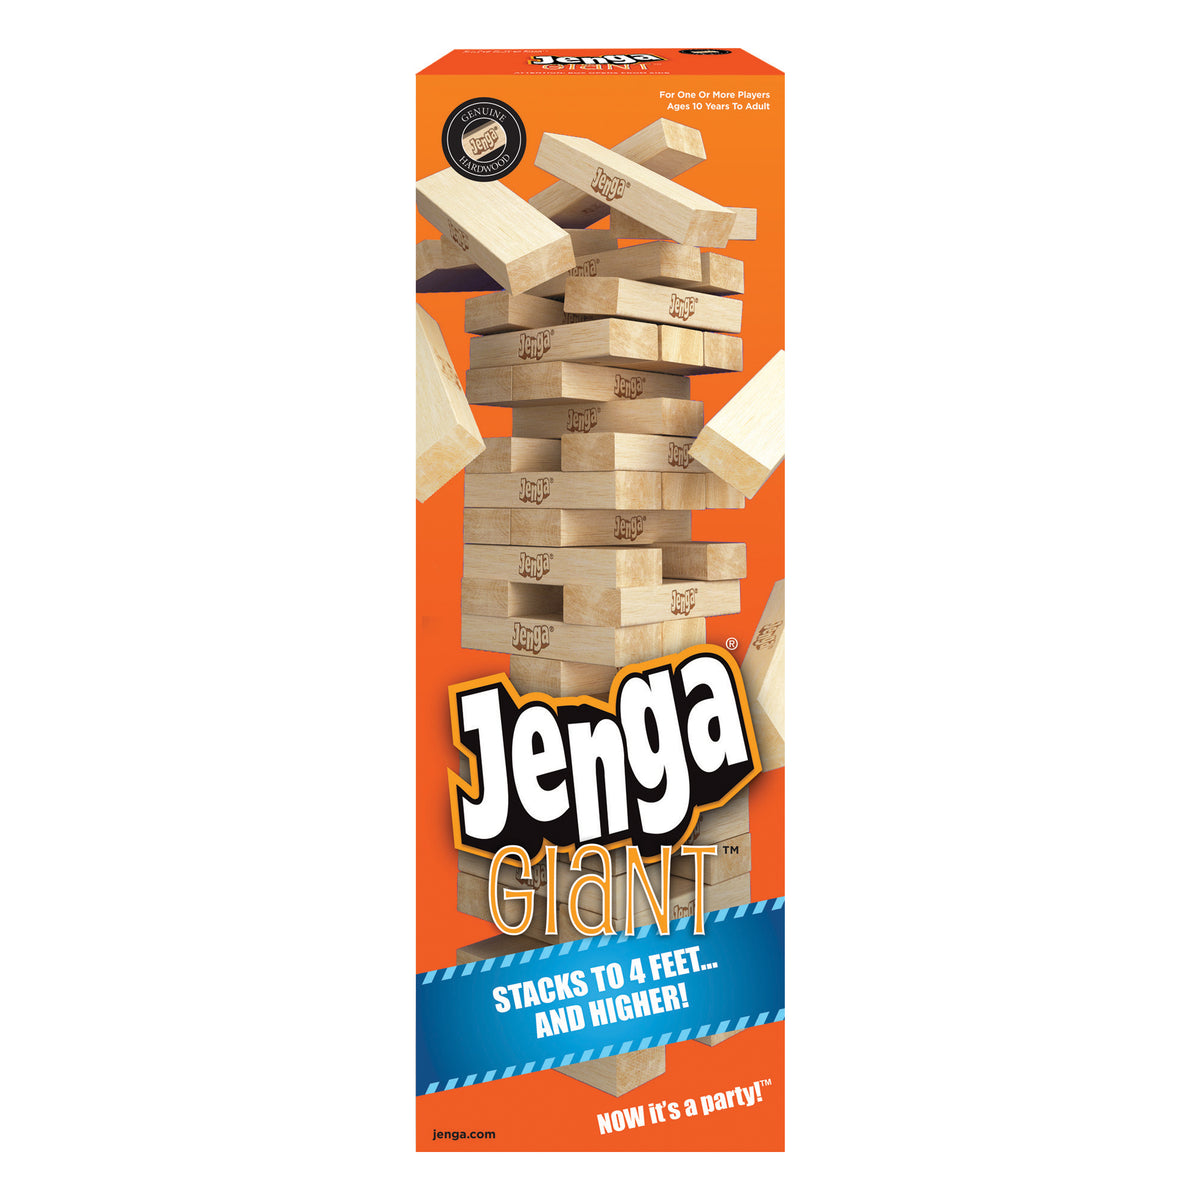 Genuine Hardwood Jenga Giant, Family Game